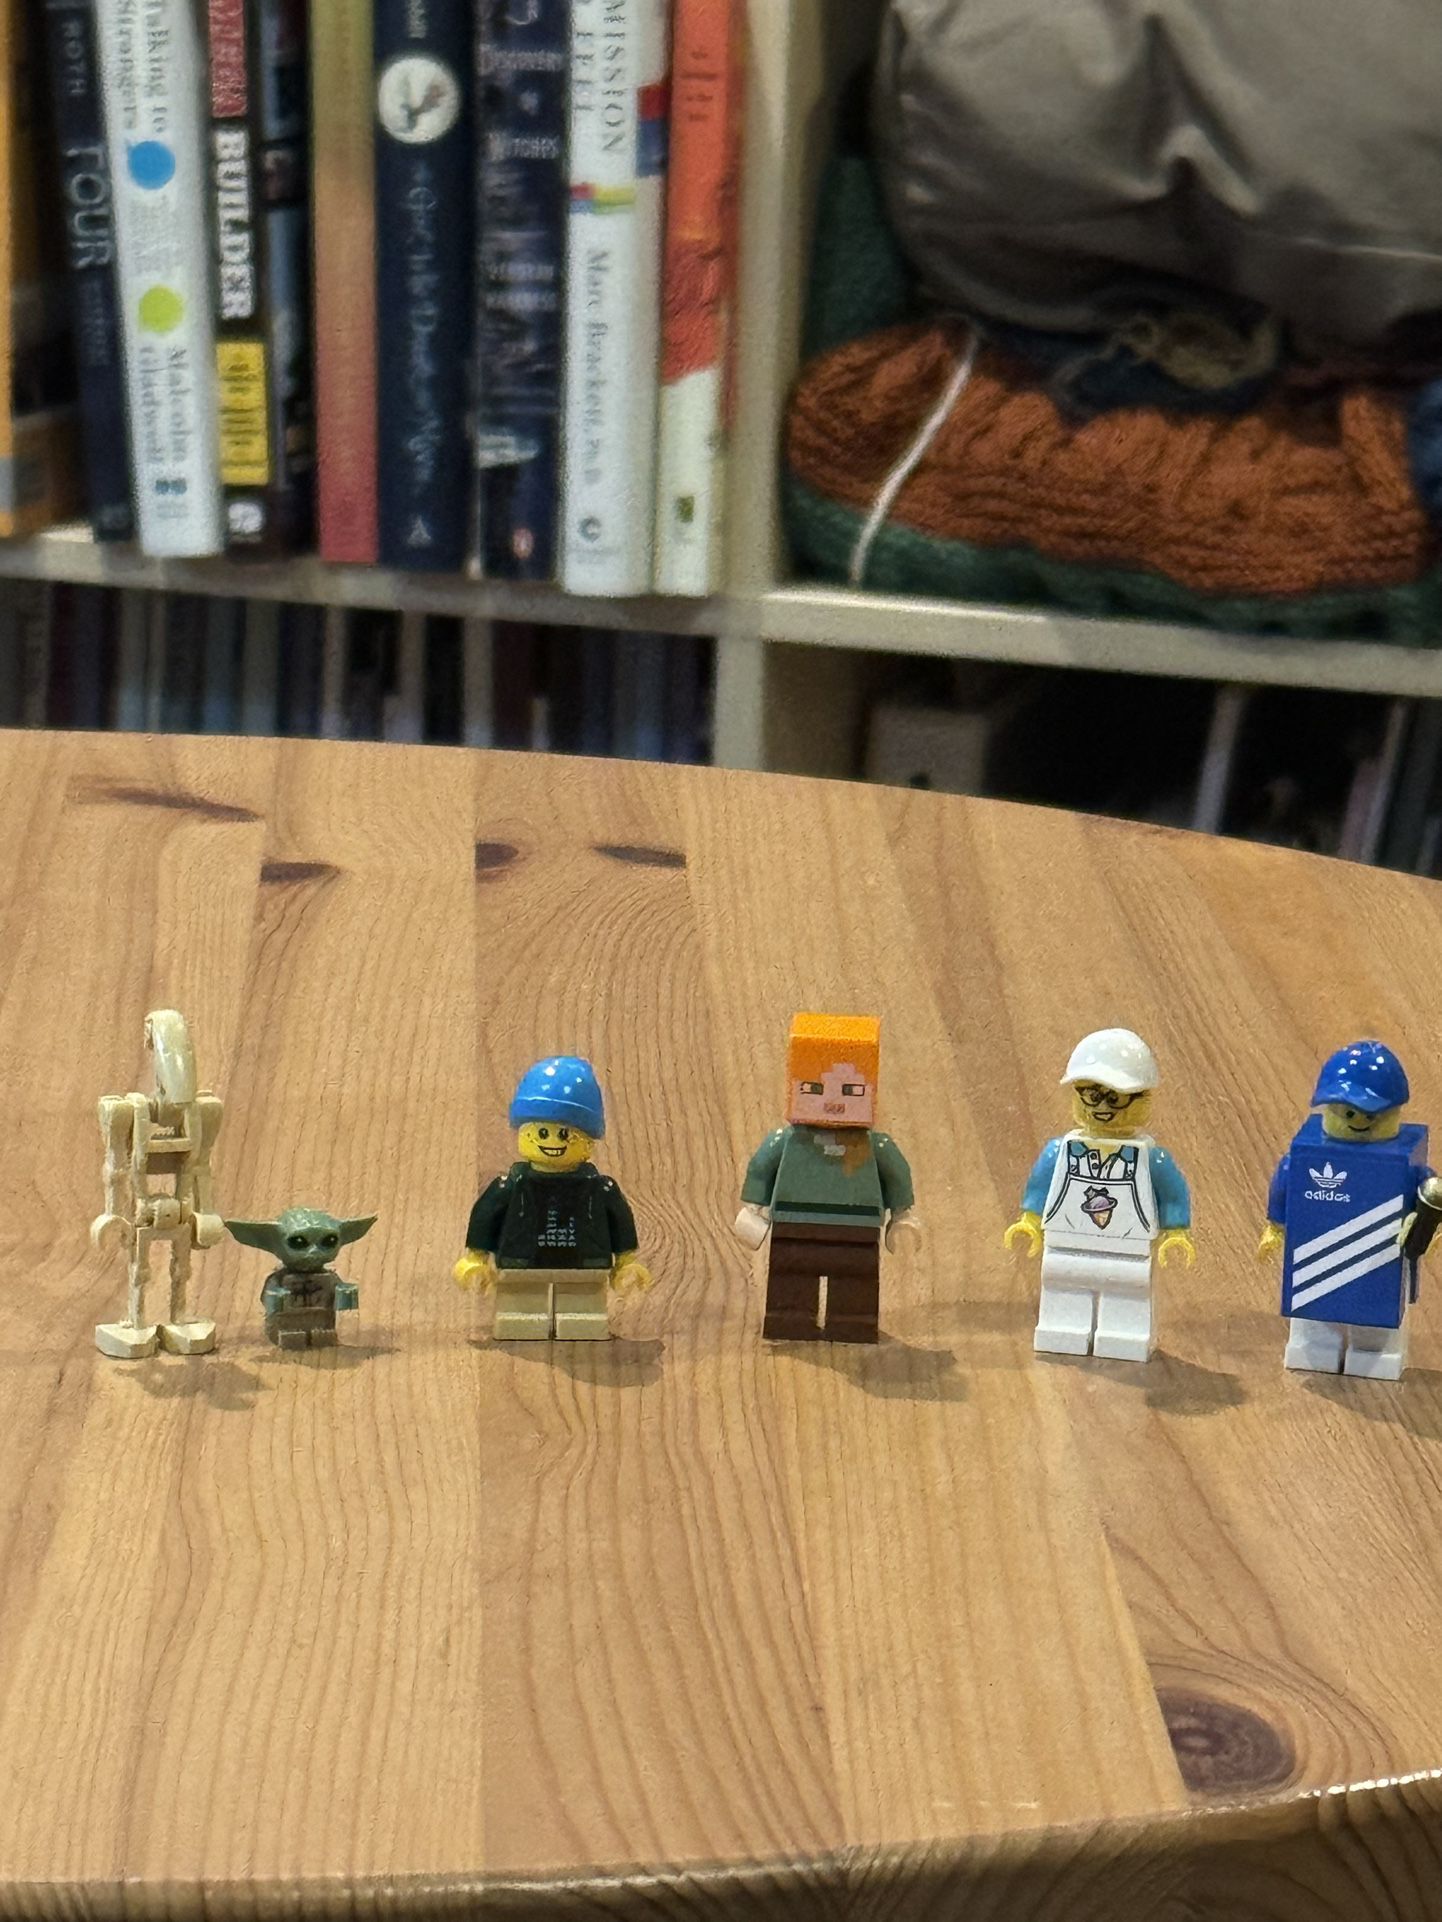 Five Random Lego Mini Figures